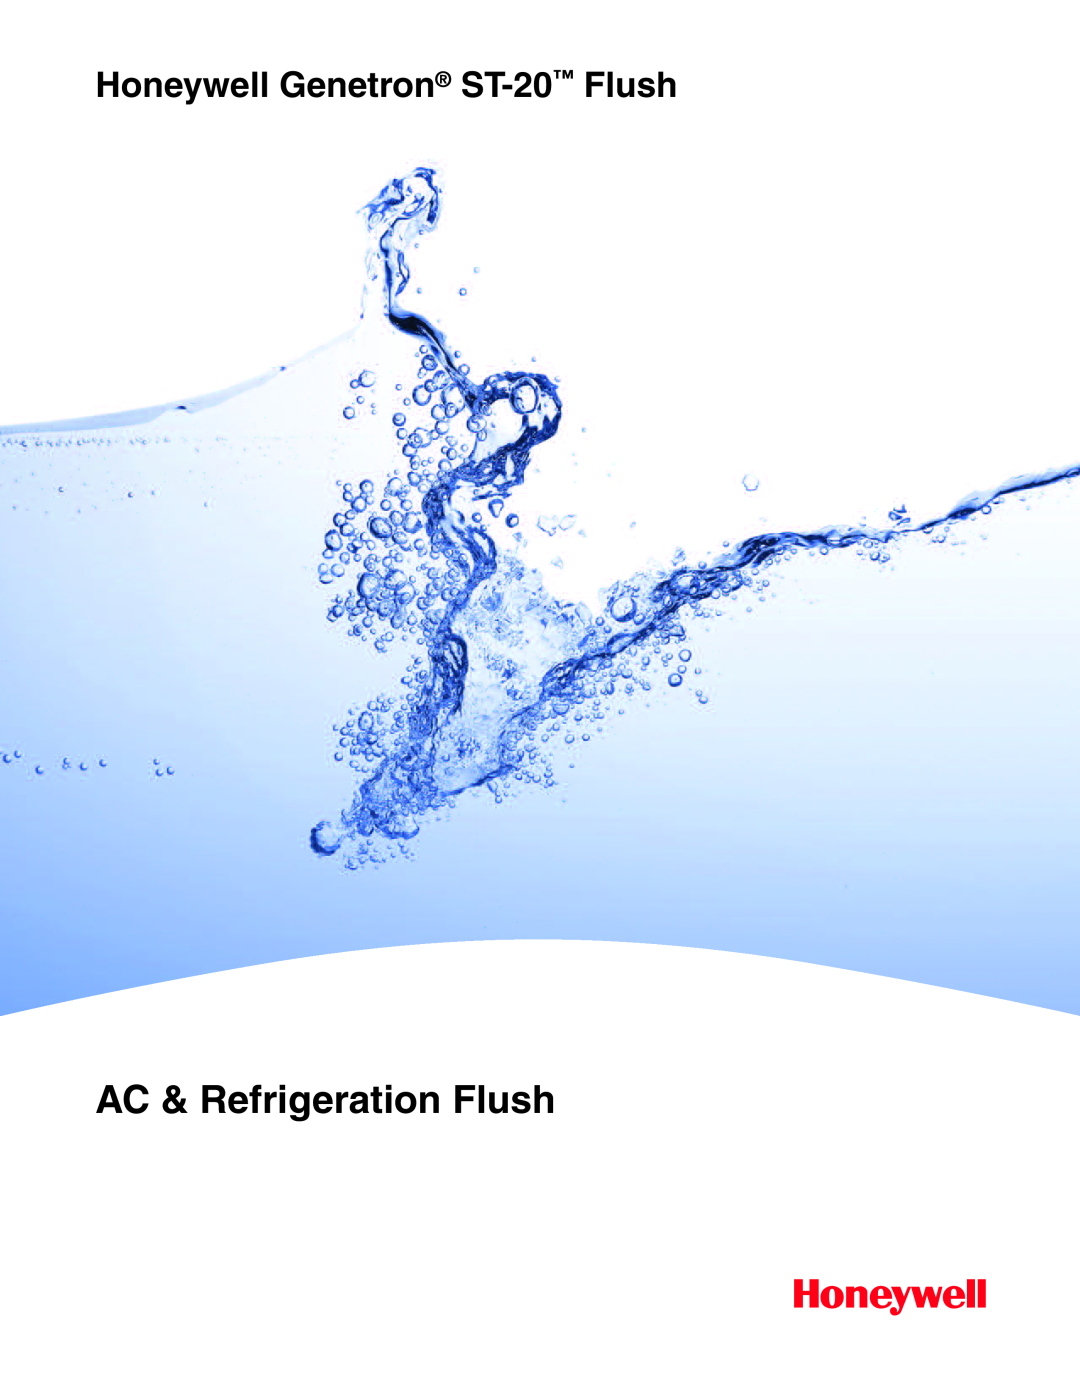 Honeywell manual AC & Refrigeration Flush, Honeywell Genetron ST-20 Flush 